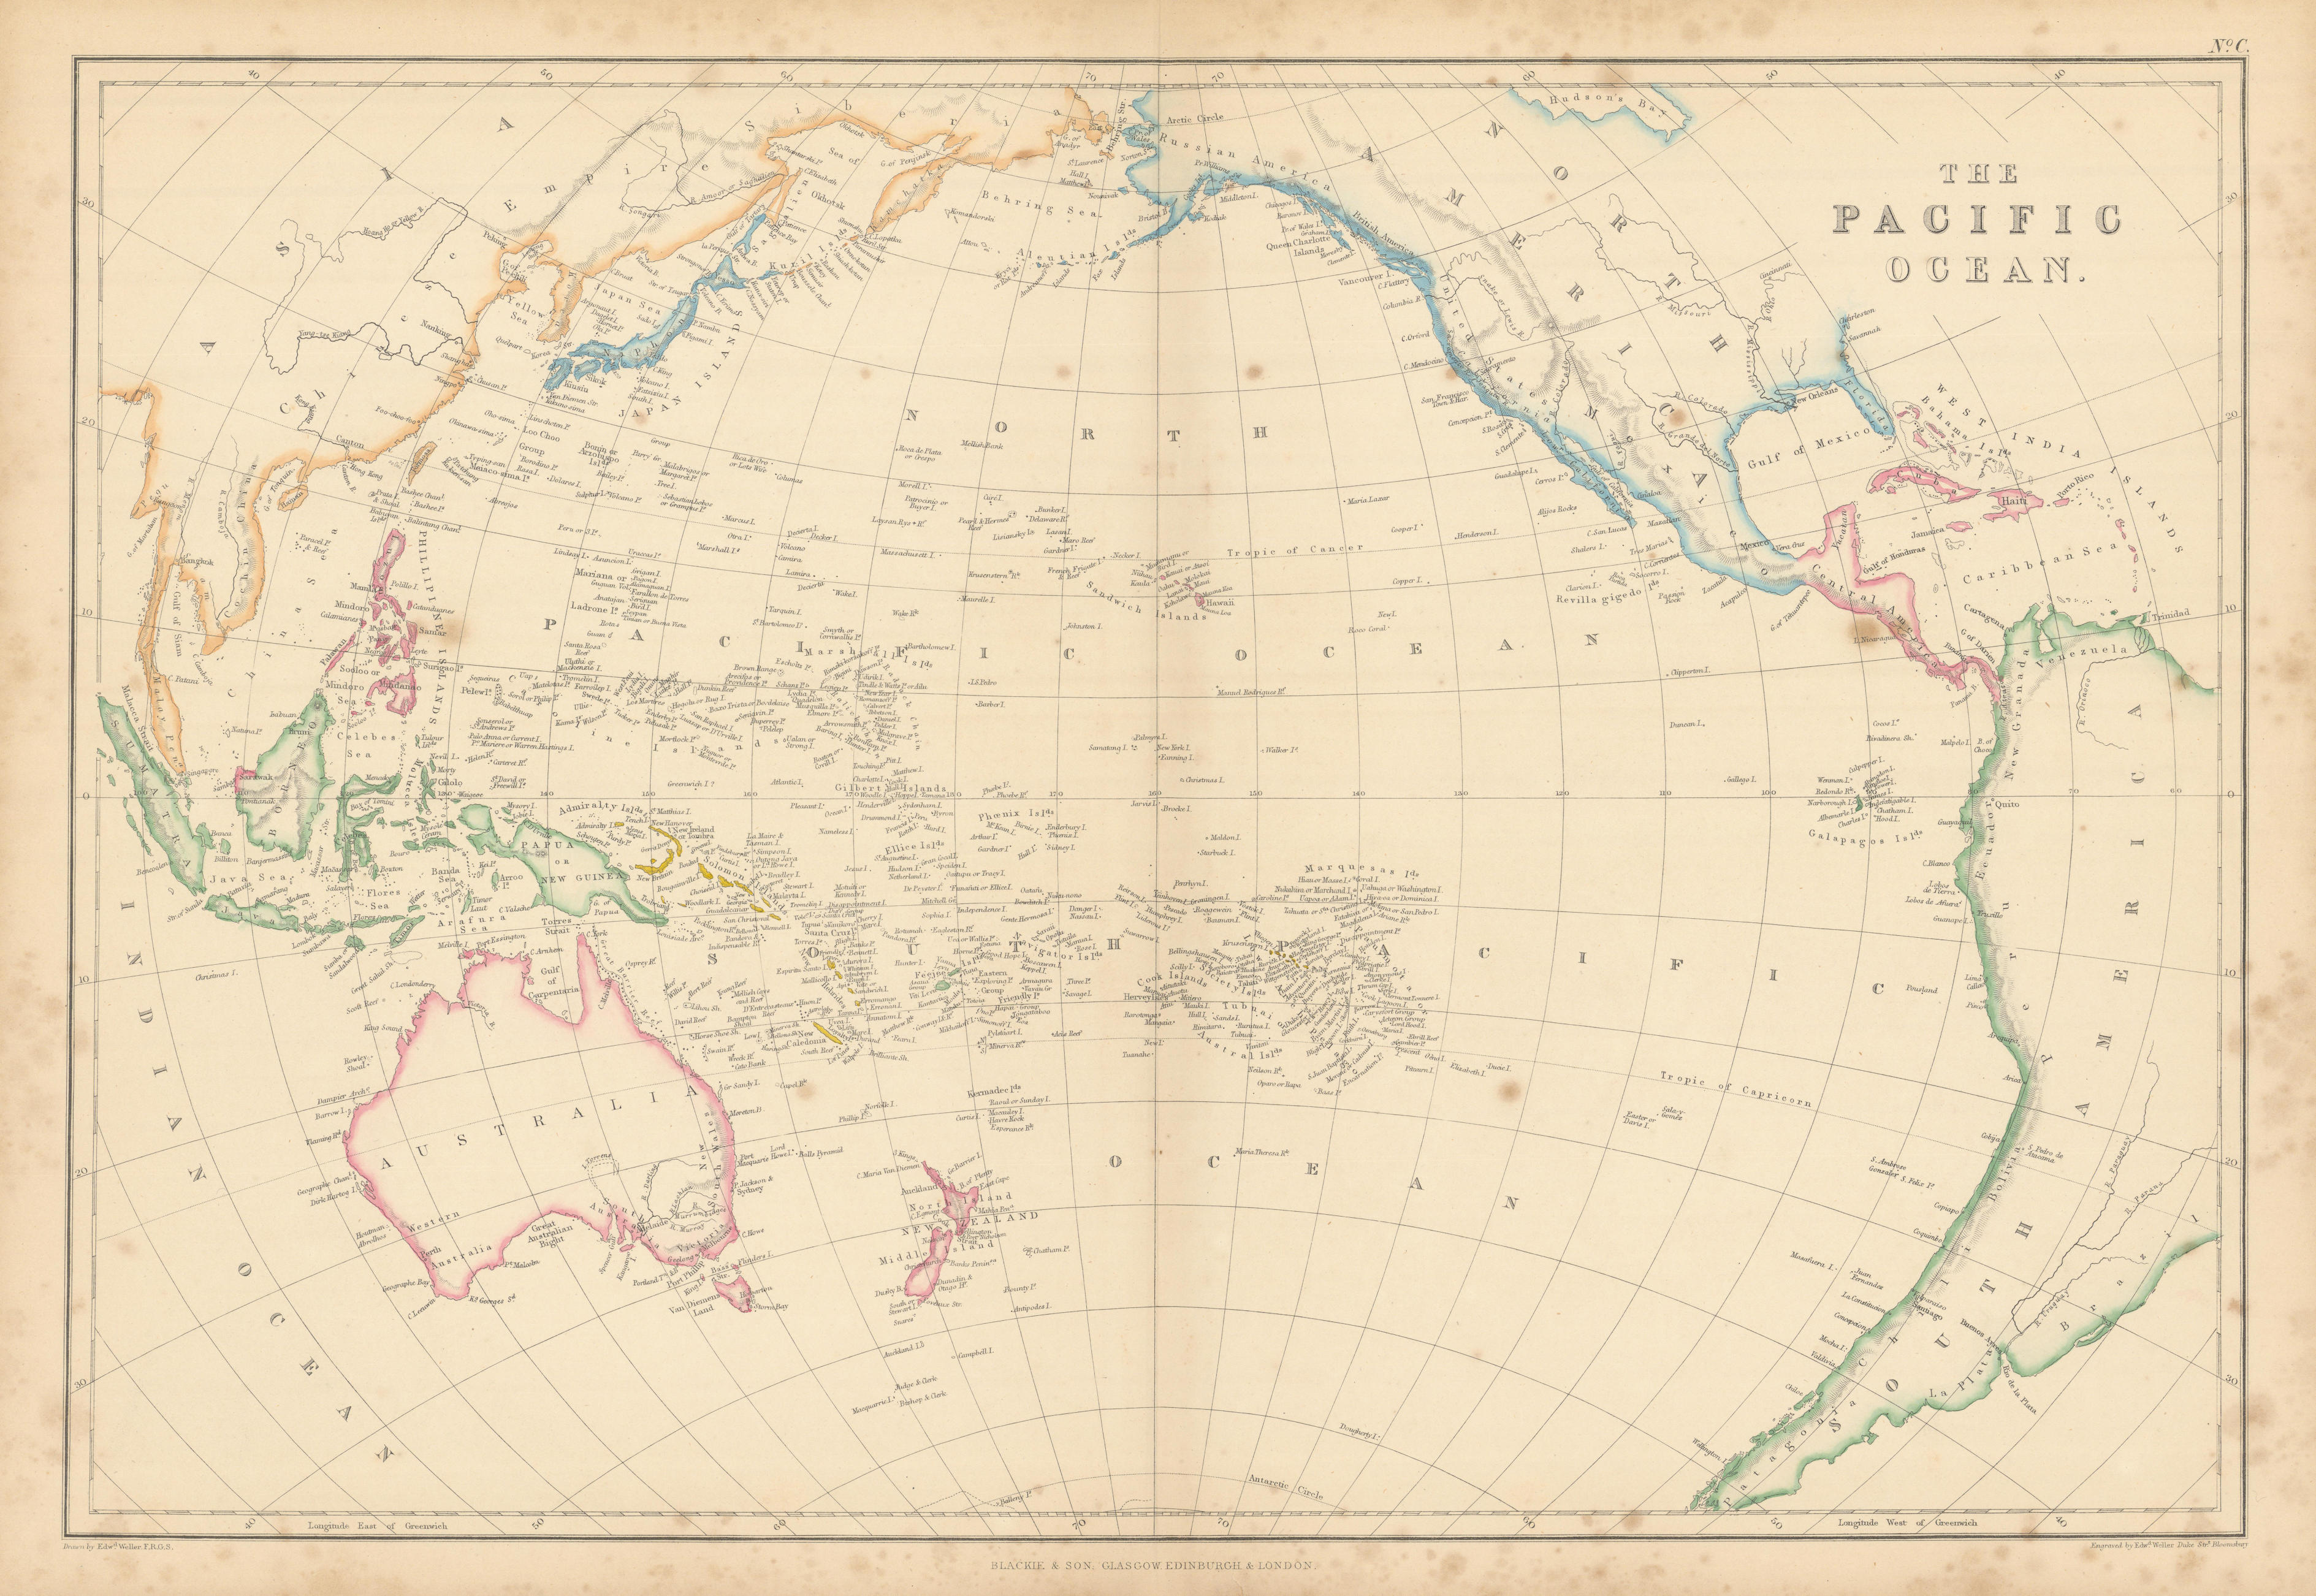 Associate Product The Pacific Ocean by Edward Weller. Polynesia Micronesia Melanesia 1859 map